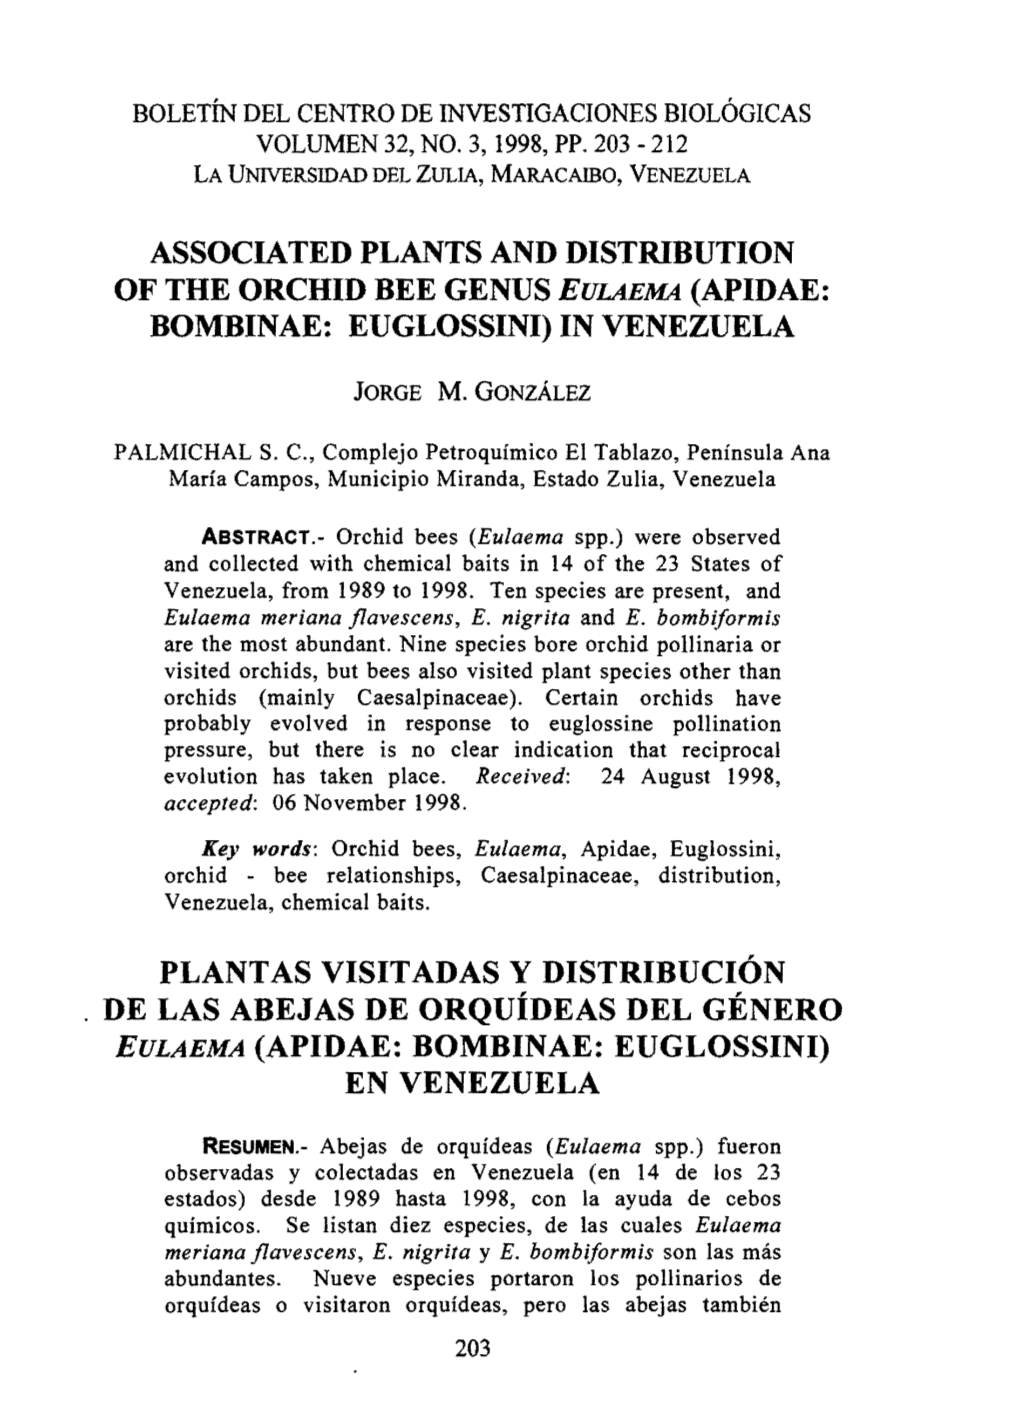 Associated Plants and Distribution of the Orchid Bee Genus Eulaema (Apidae: Bombinae: Euglossini) in Venezuela